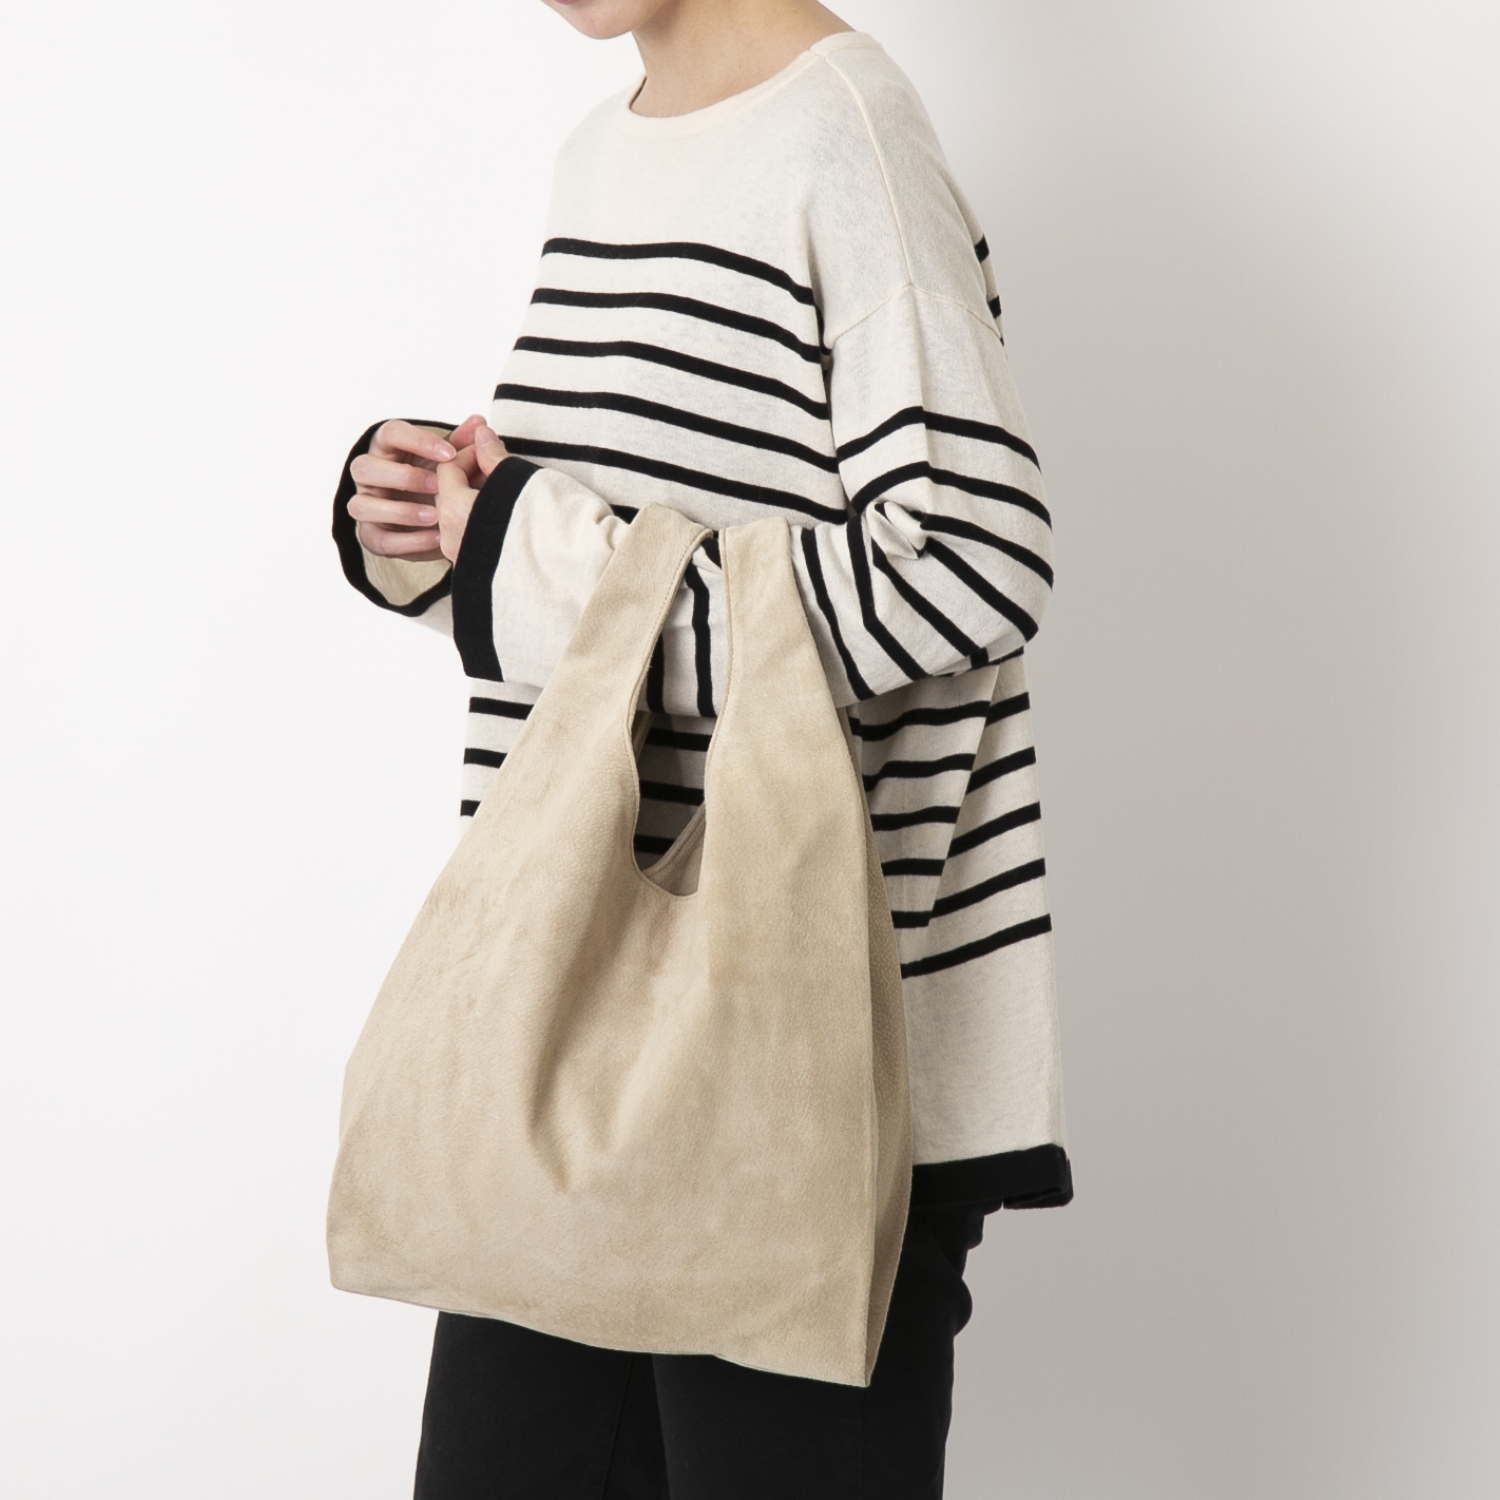 TOKYO LEATHER FACTORY/洗える革のショッピングバッグ - 丸洗いができるから、ずっと使える革のバッグ